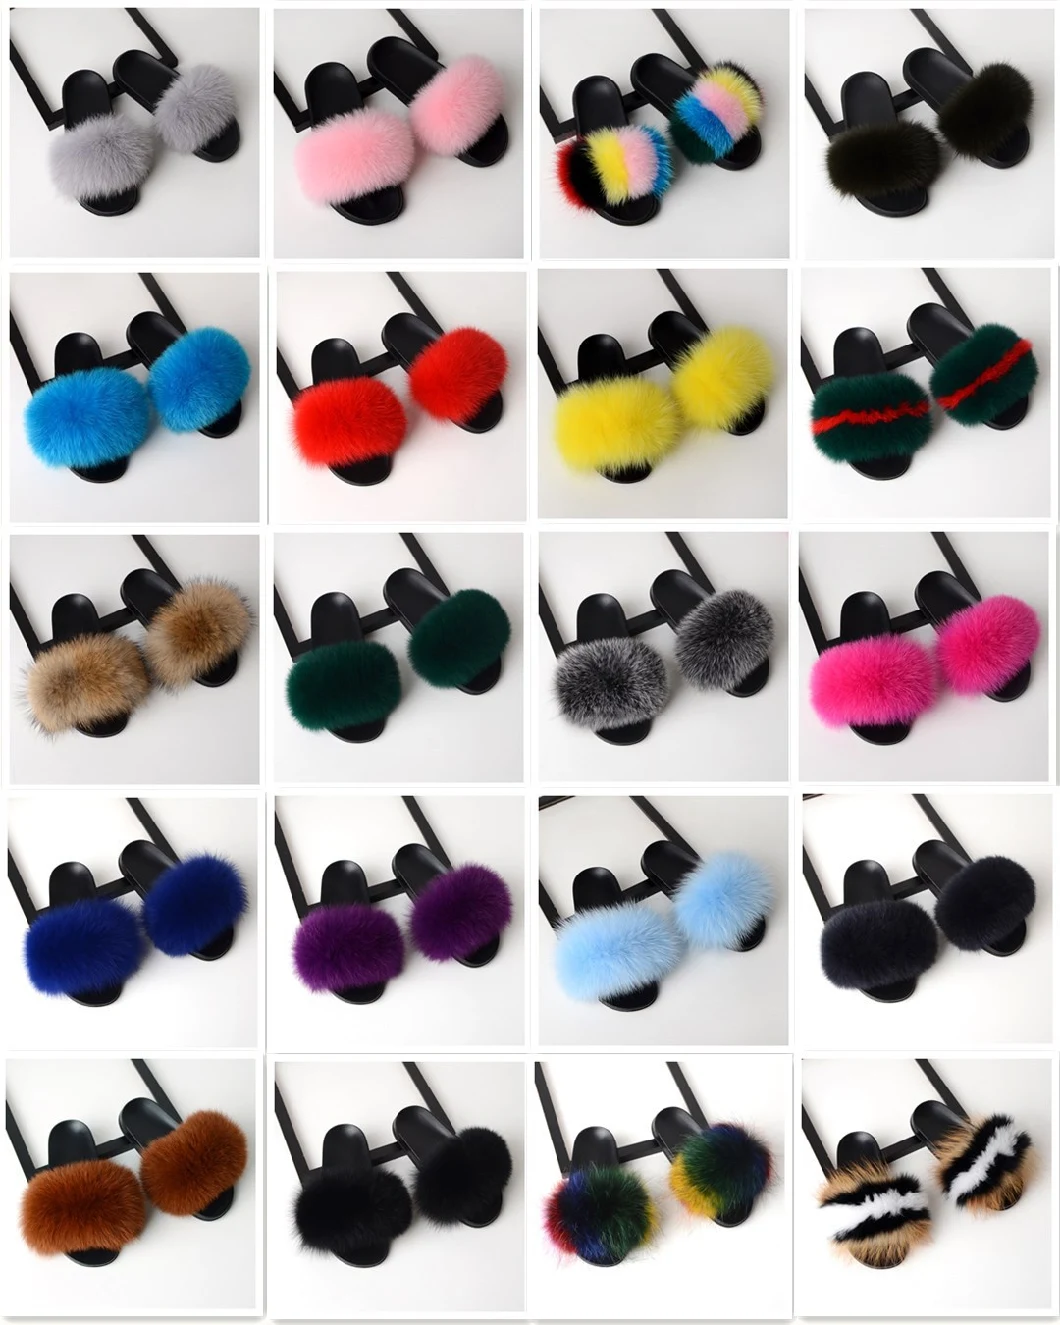 Superstarer 2020 Womens Designer Fluffy Rainbow Girls Faux Wholesale Fox Real Fur Slides Sandals for Women Fur Sandals